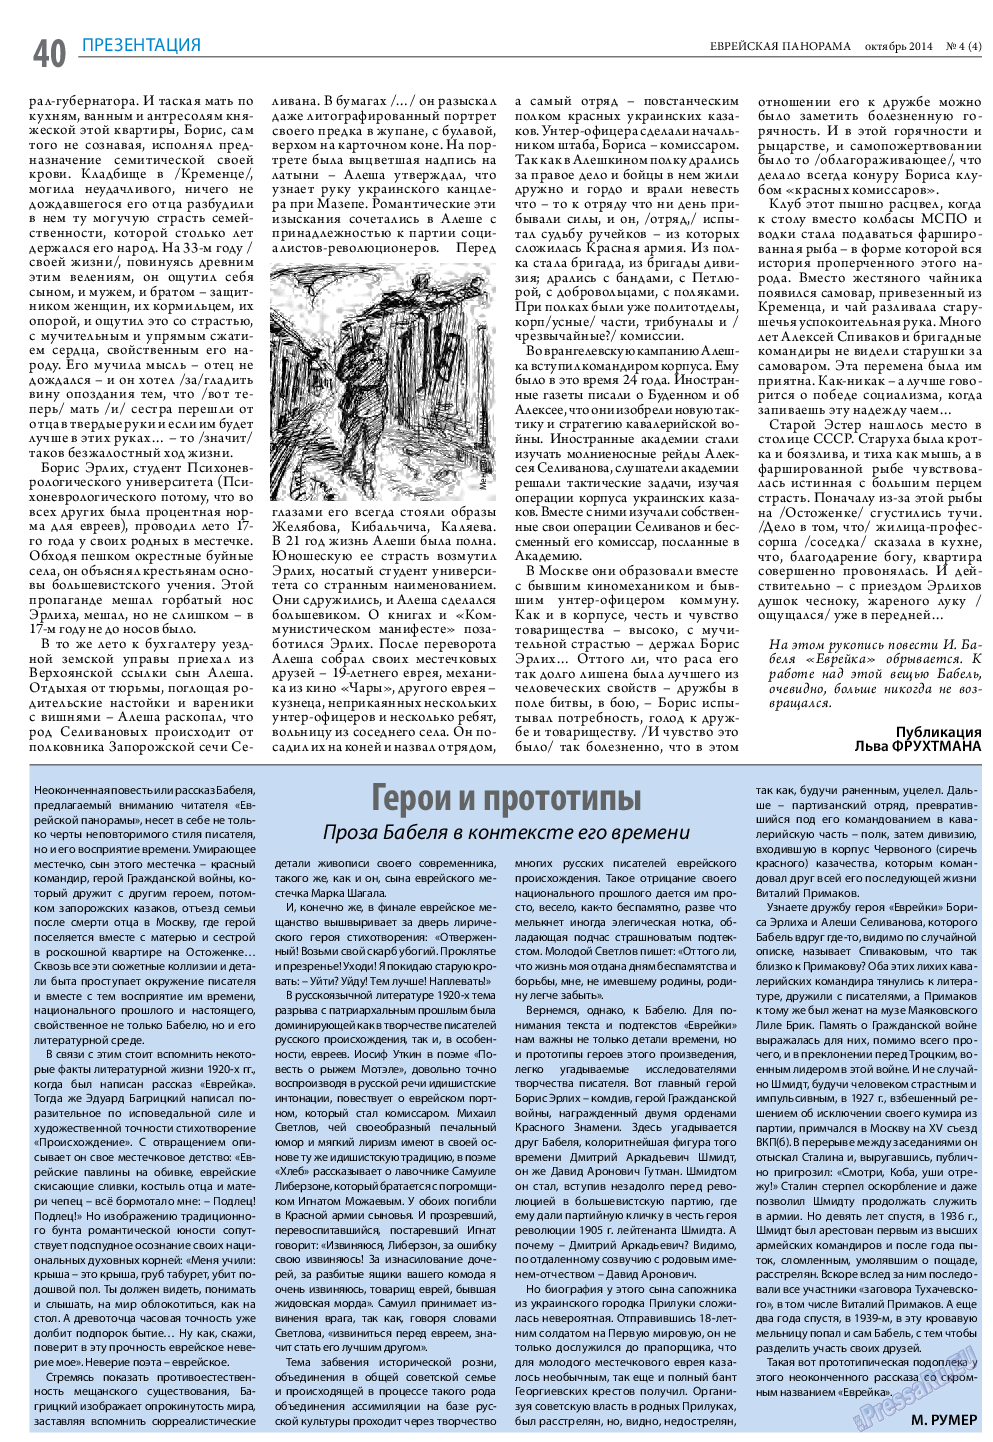 Еврейская панорама, газета. 2014 №4 стр.40